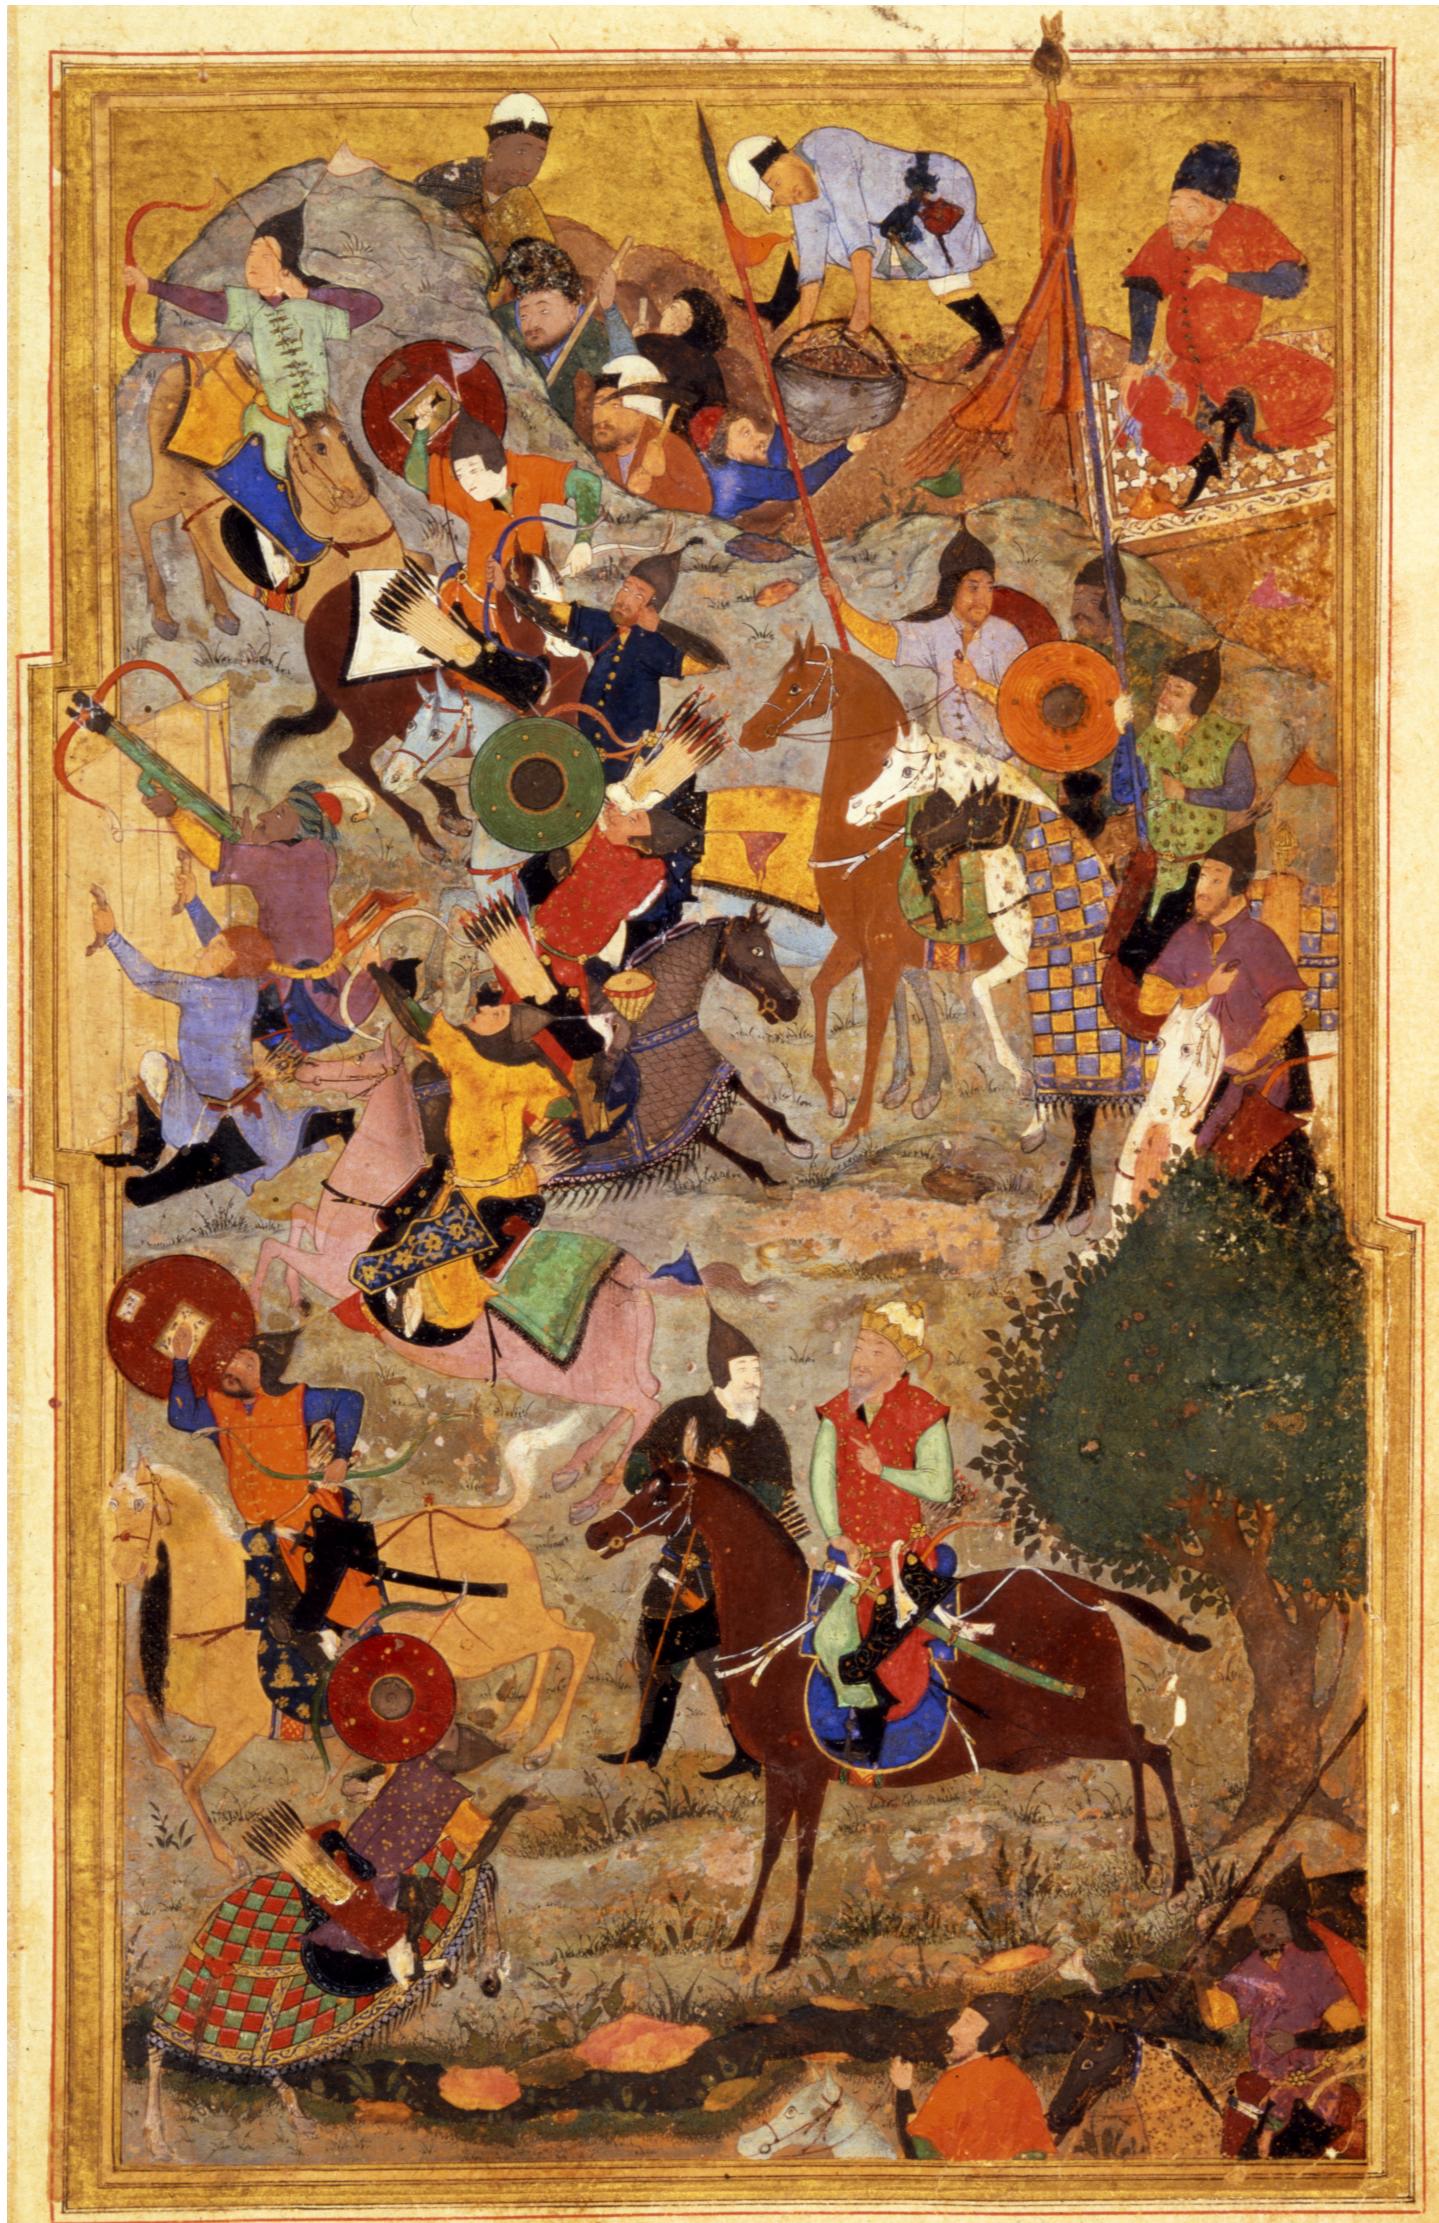 File:Behzad - Siege of Smyrna - Plate 12.jpg - Wikipedia